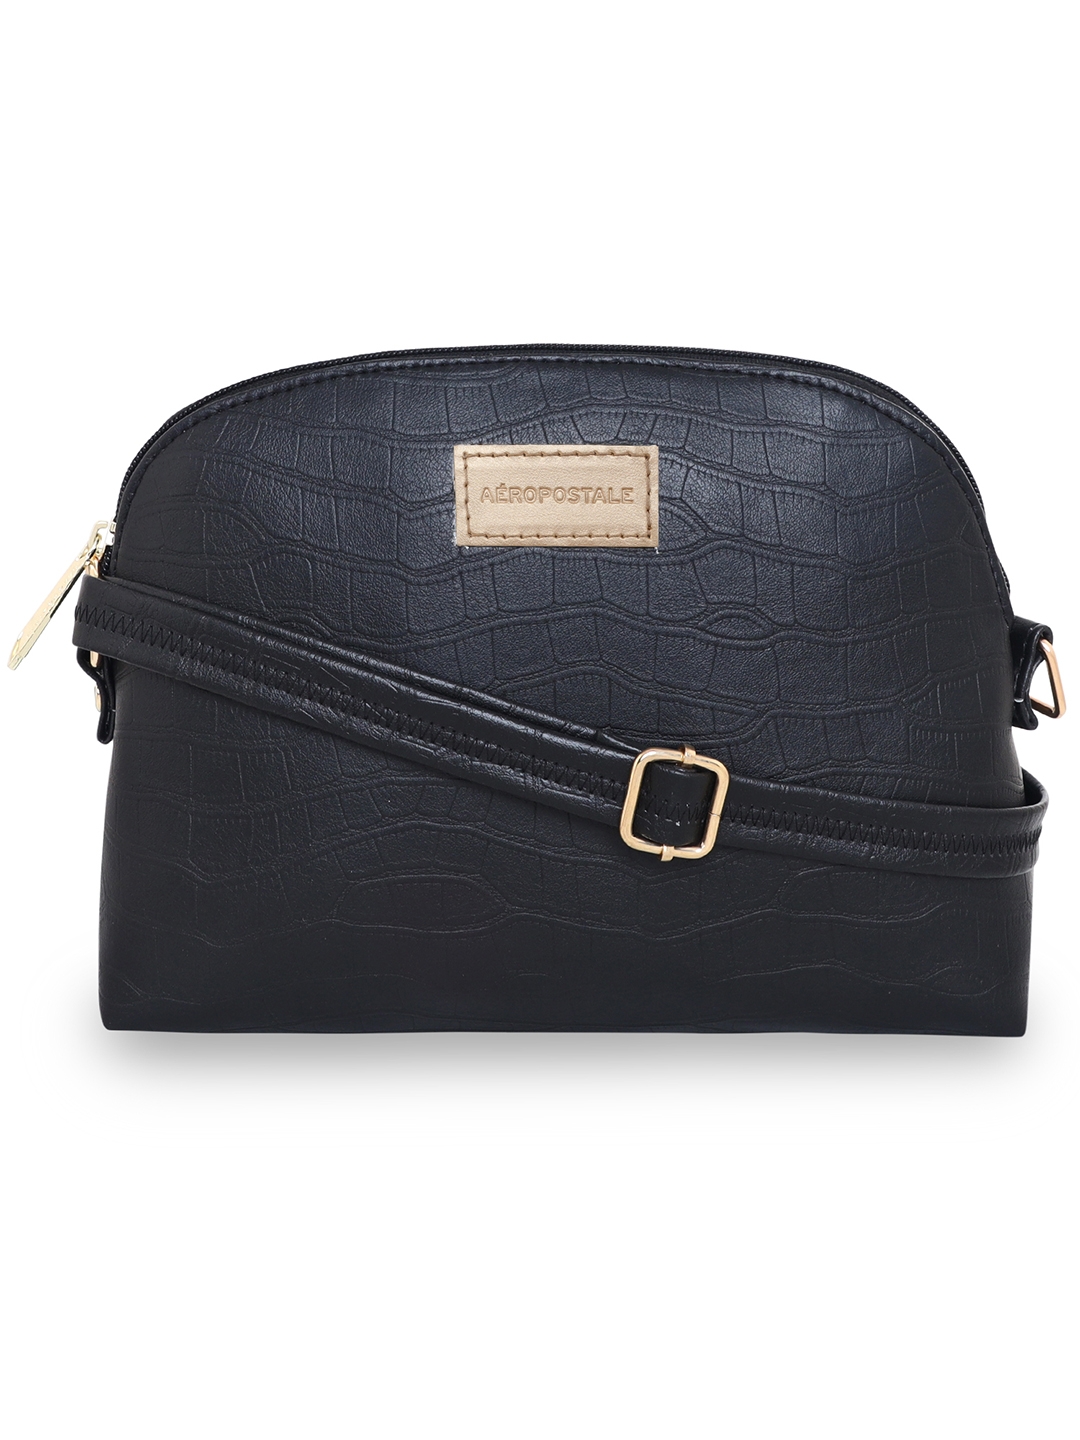 Aeropostale | Aeropostale Textured Kylie PU Sling Bag with non-detachable strap (Black)